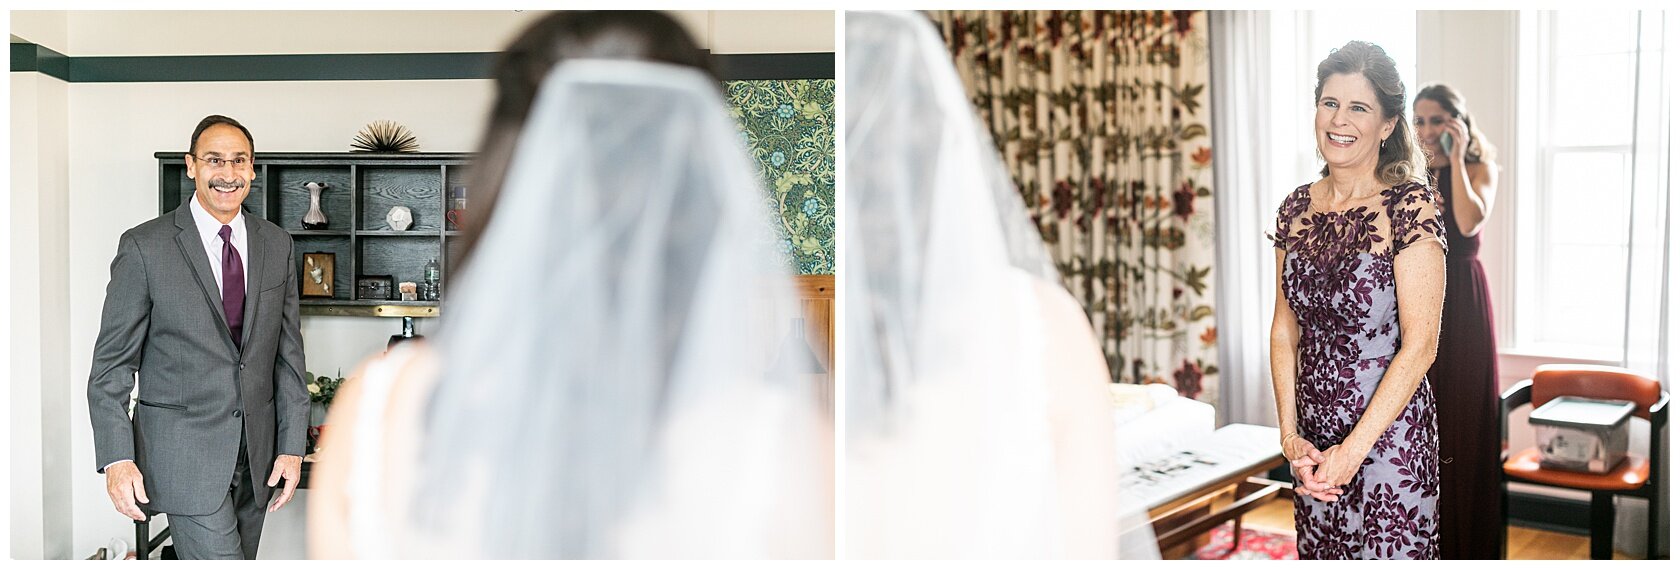 Marisa Kris The Winslow Wedding Oct 2019 Living Radiant Photography_0016.jpg